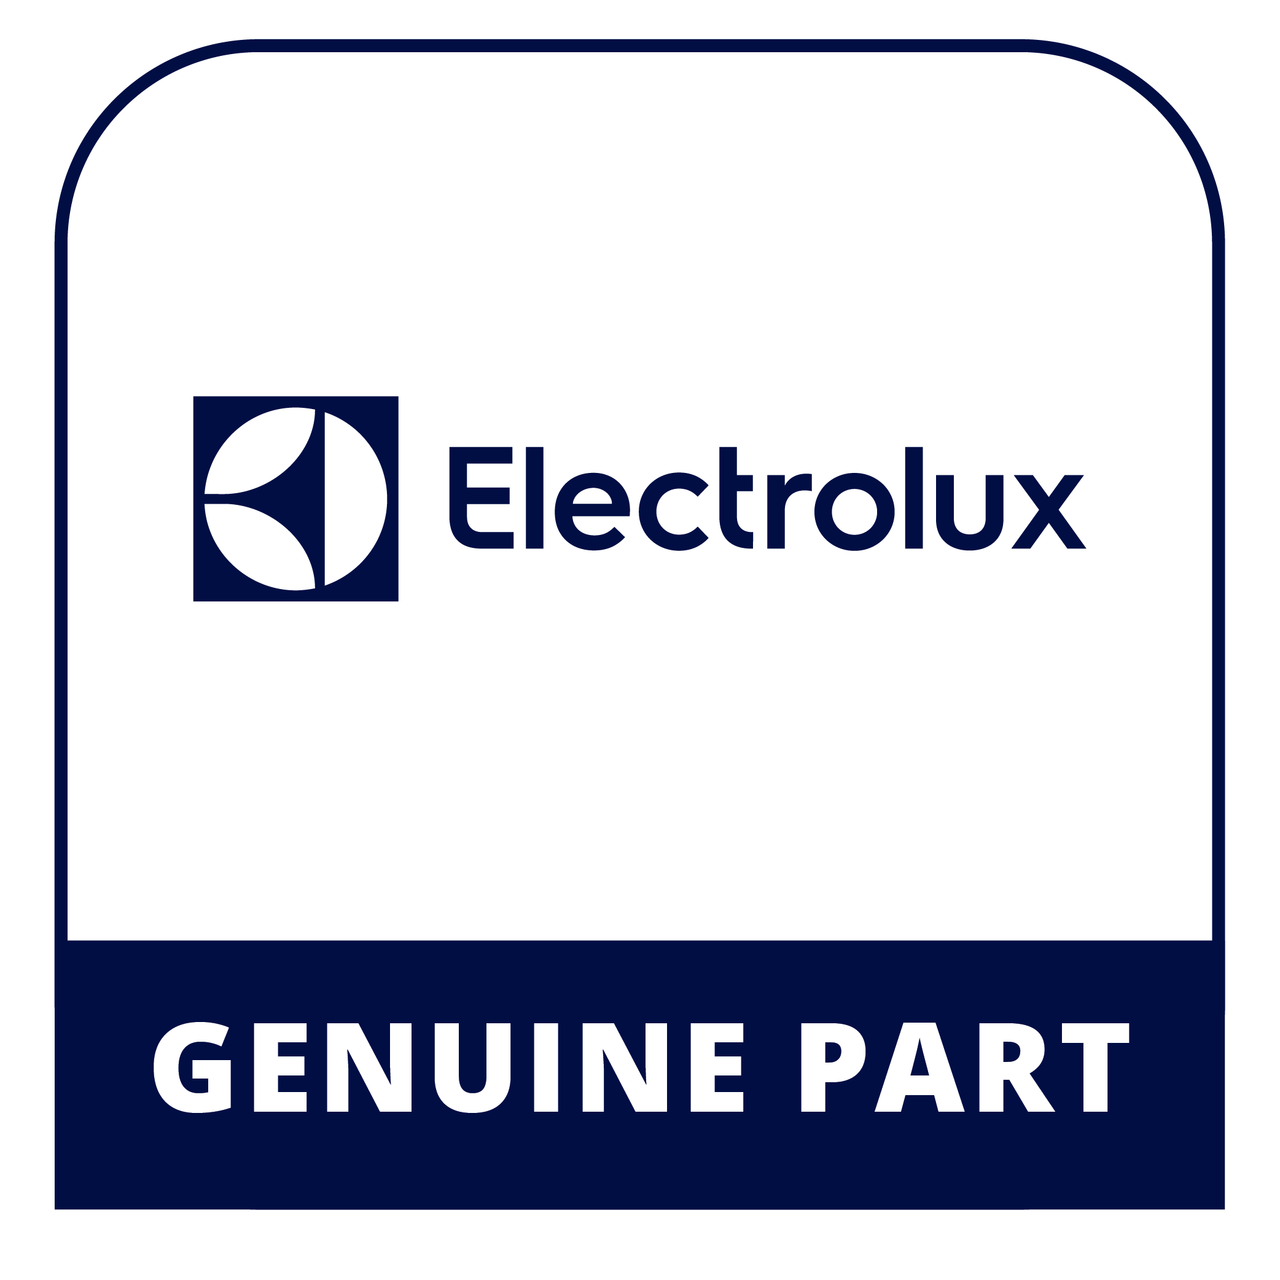 Frigidaire - Electrolux 5304523897 Tag - Genuine Electrolux Part